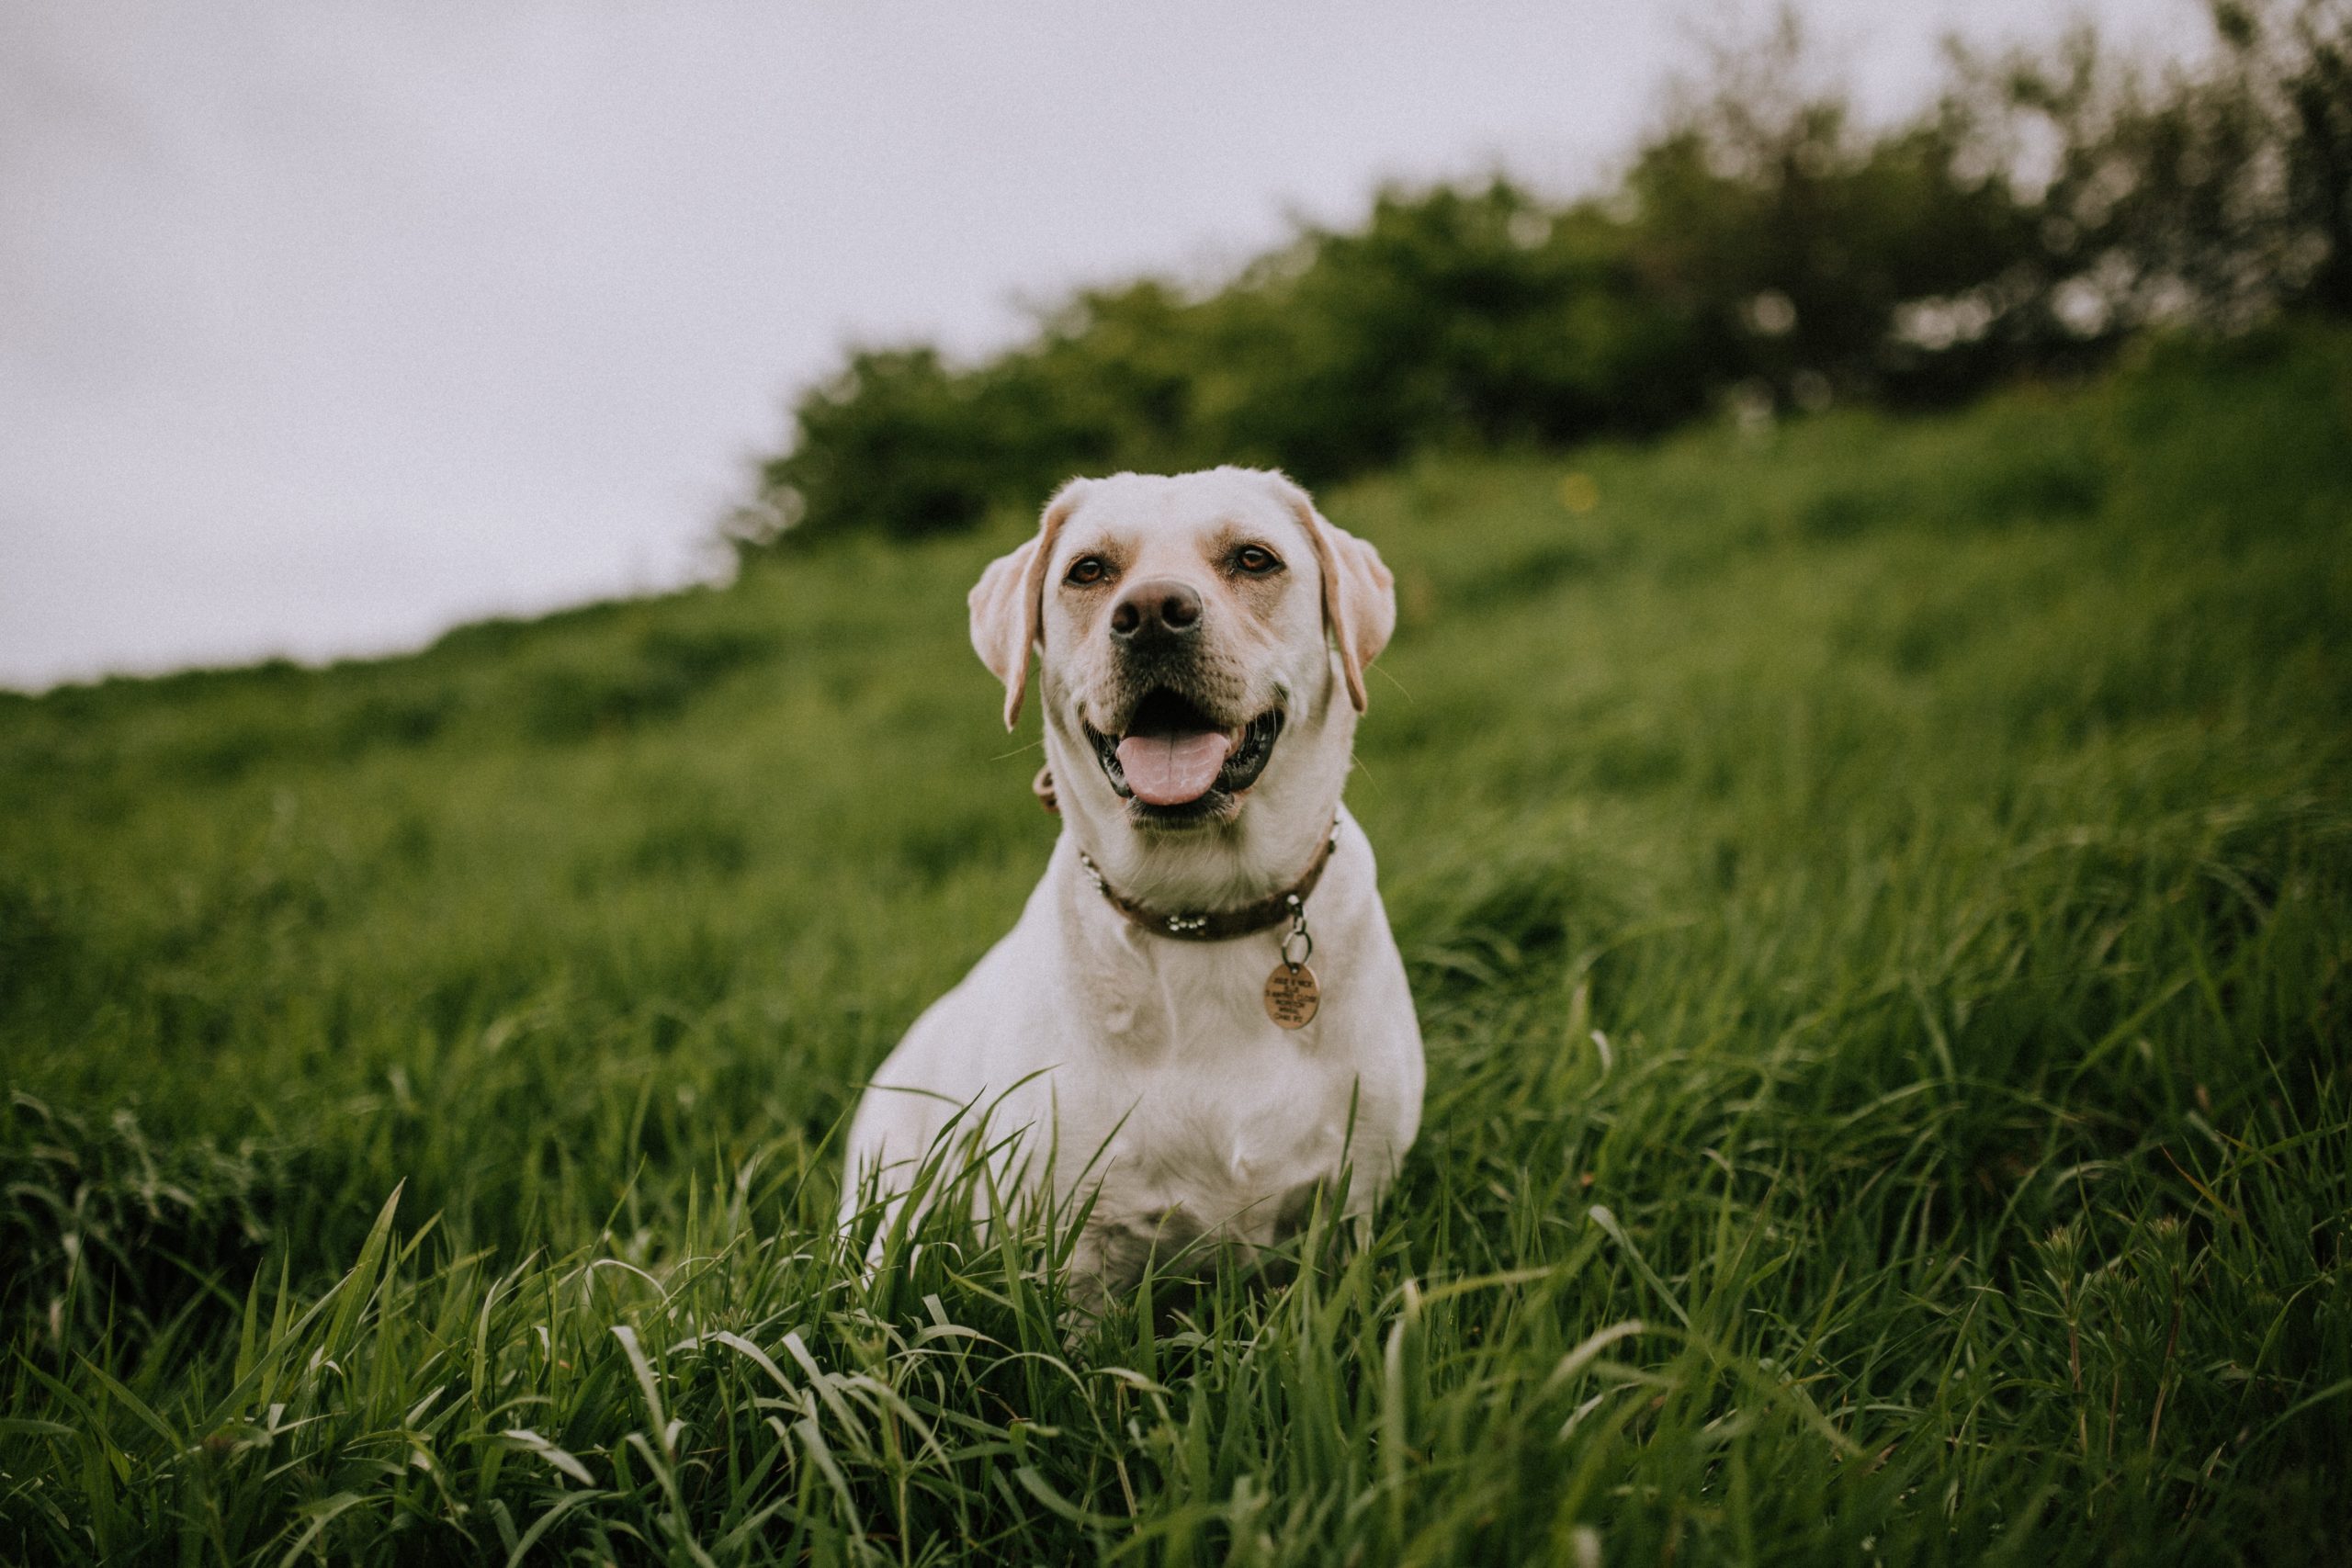 Dog standing in a grassy field